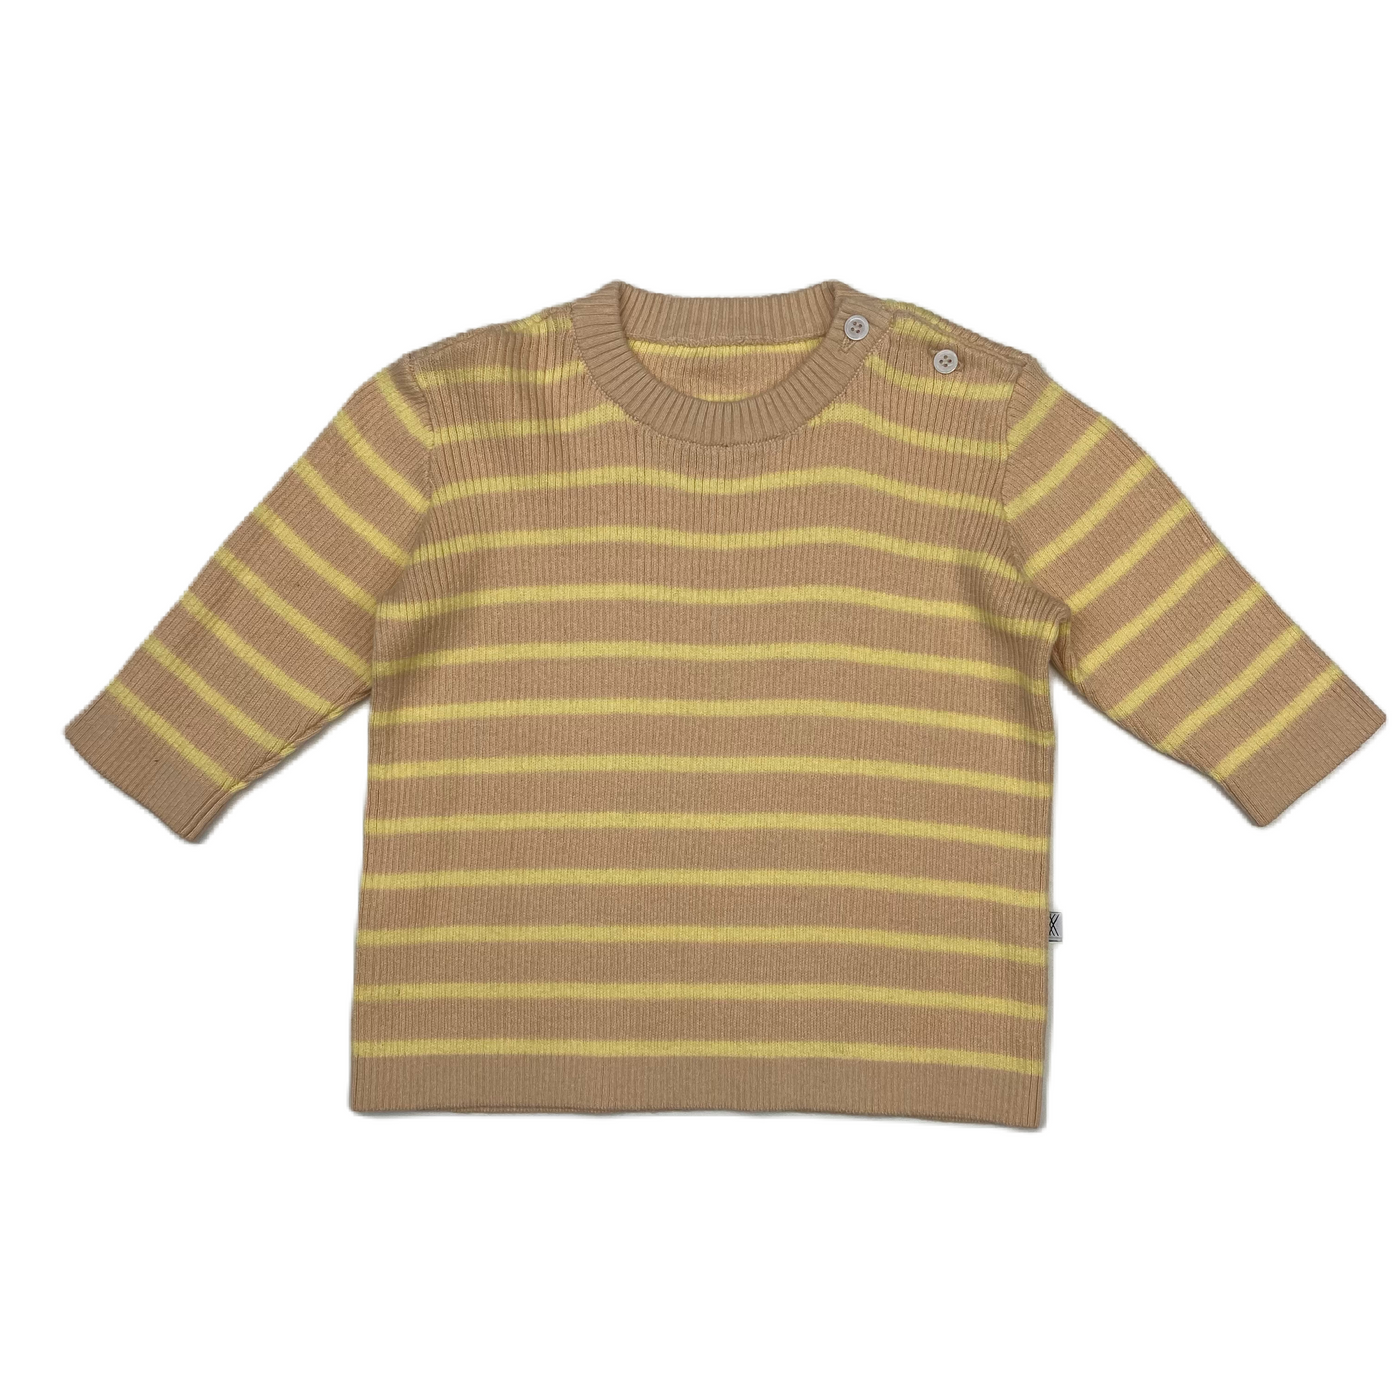 Repose Ams. - Minikin knitted sweater stripes yellow nude 6m